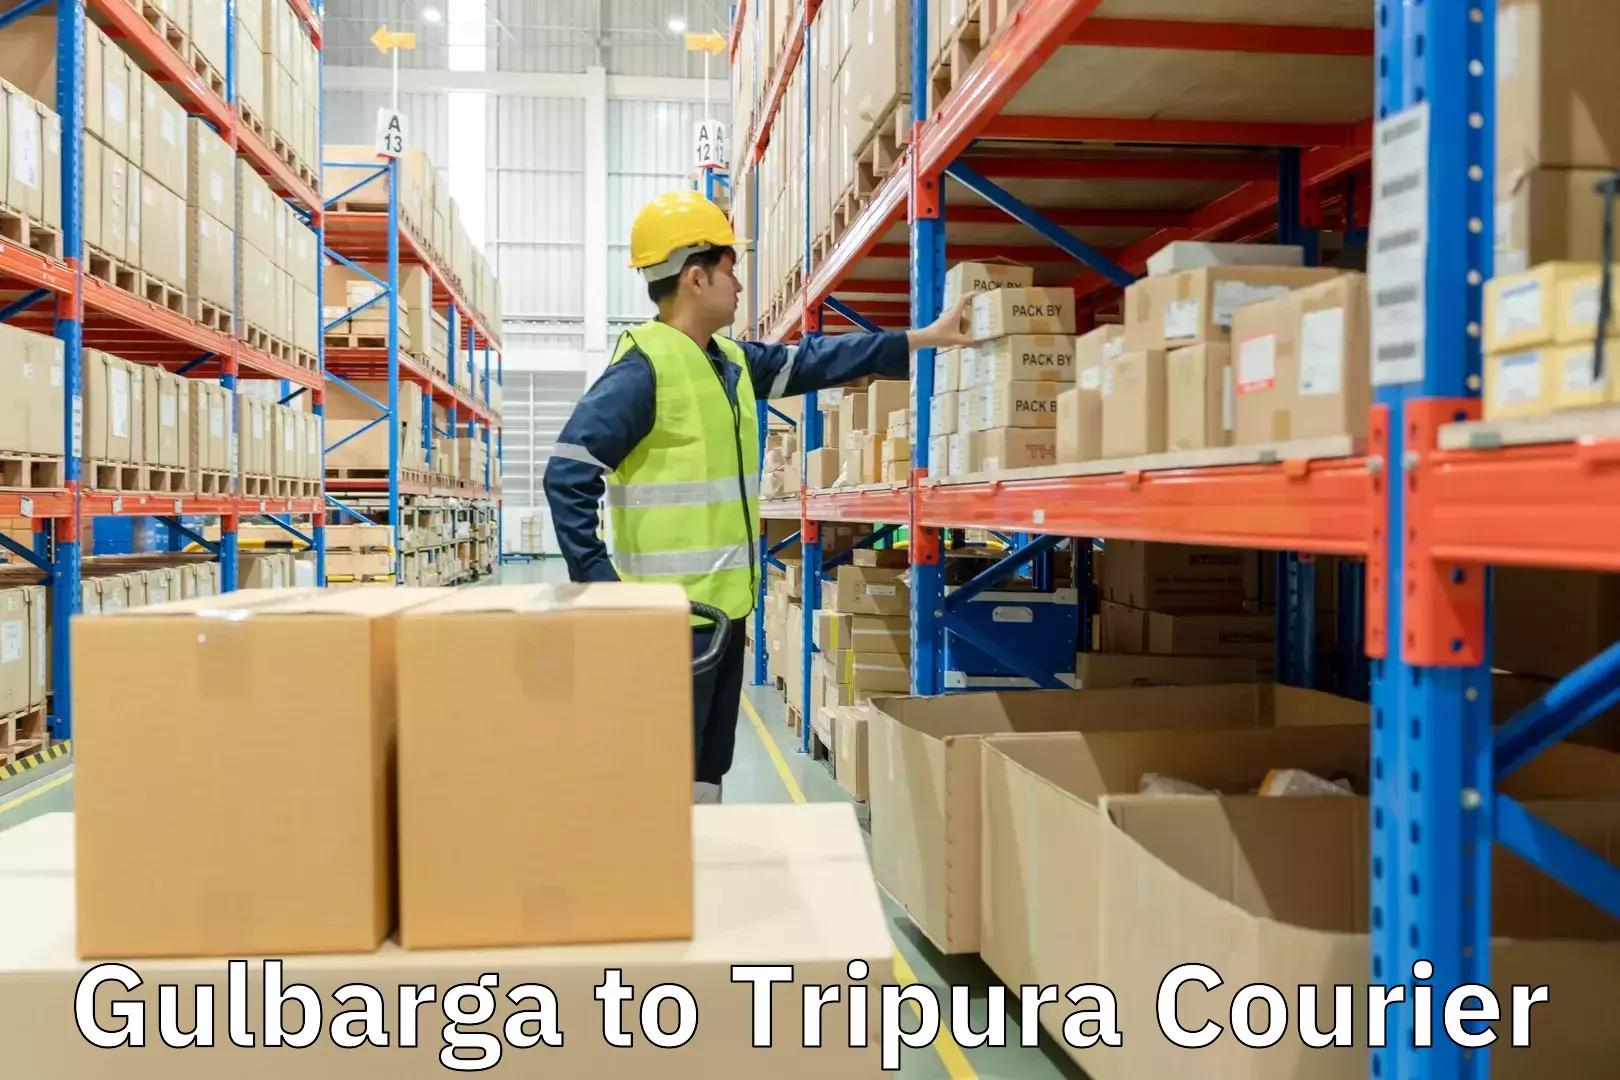 Cash on delivery service Gulbarga to Tripura